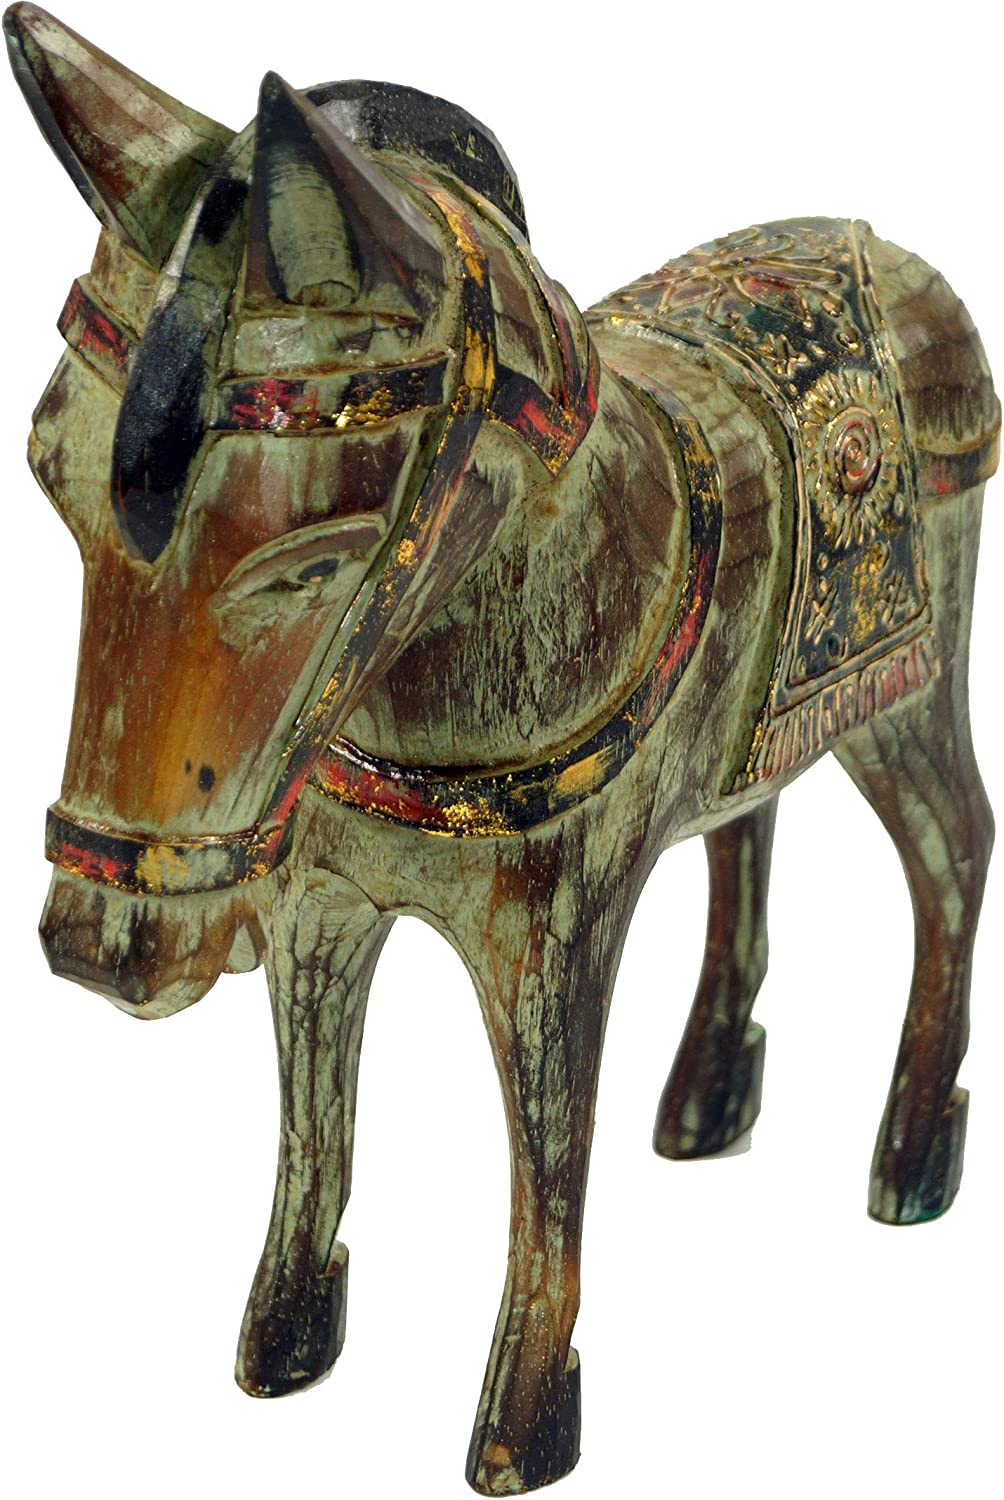 GURU SHOP Carved Horse, Decorative Object Made of Wood, Design 2, Grey, 26 x 24 x 7 cm, Animal Figures